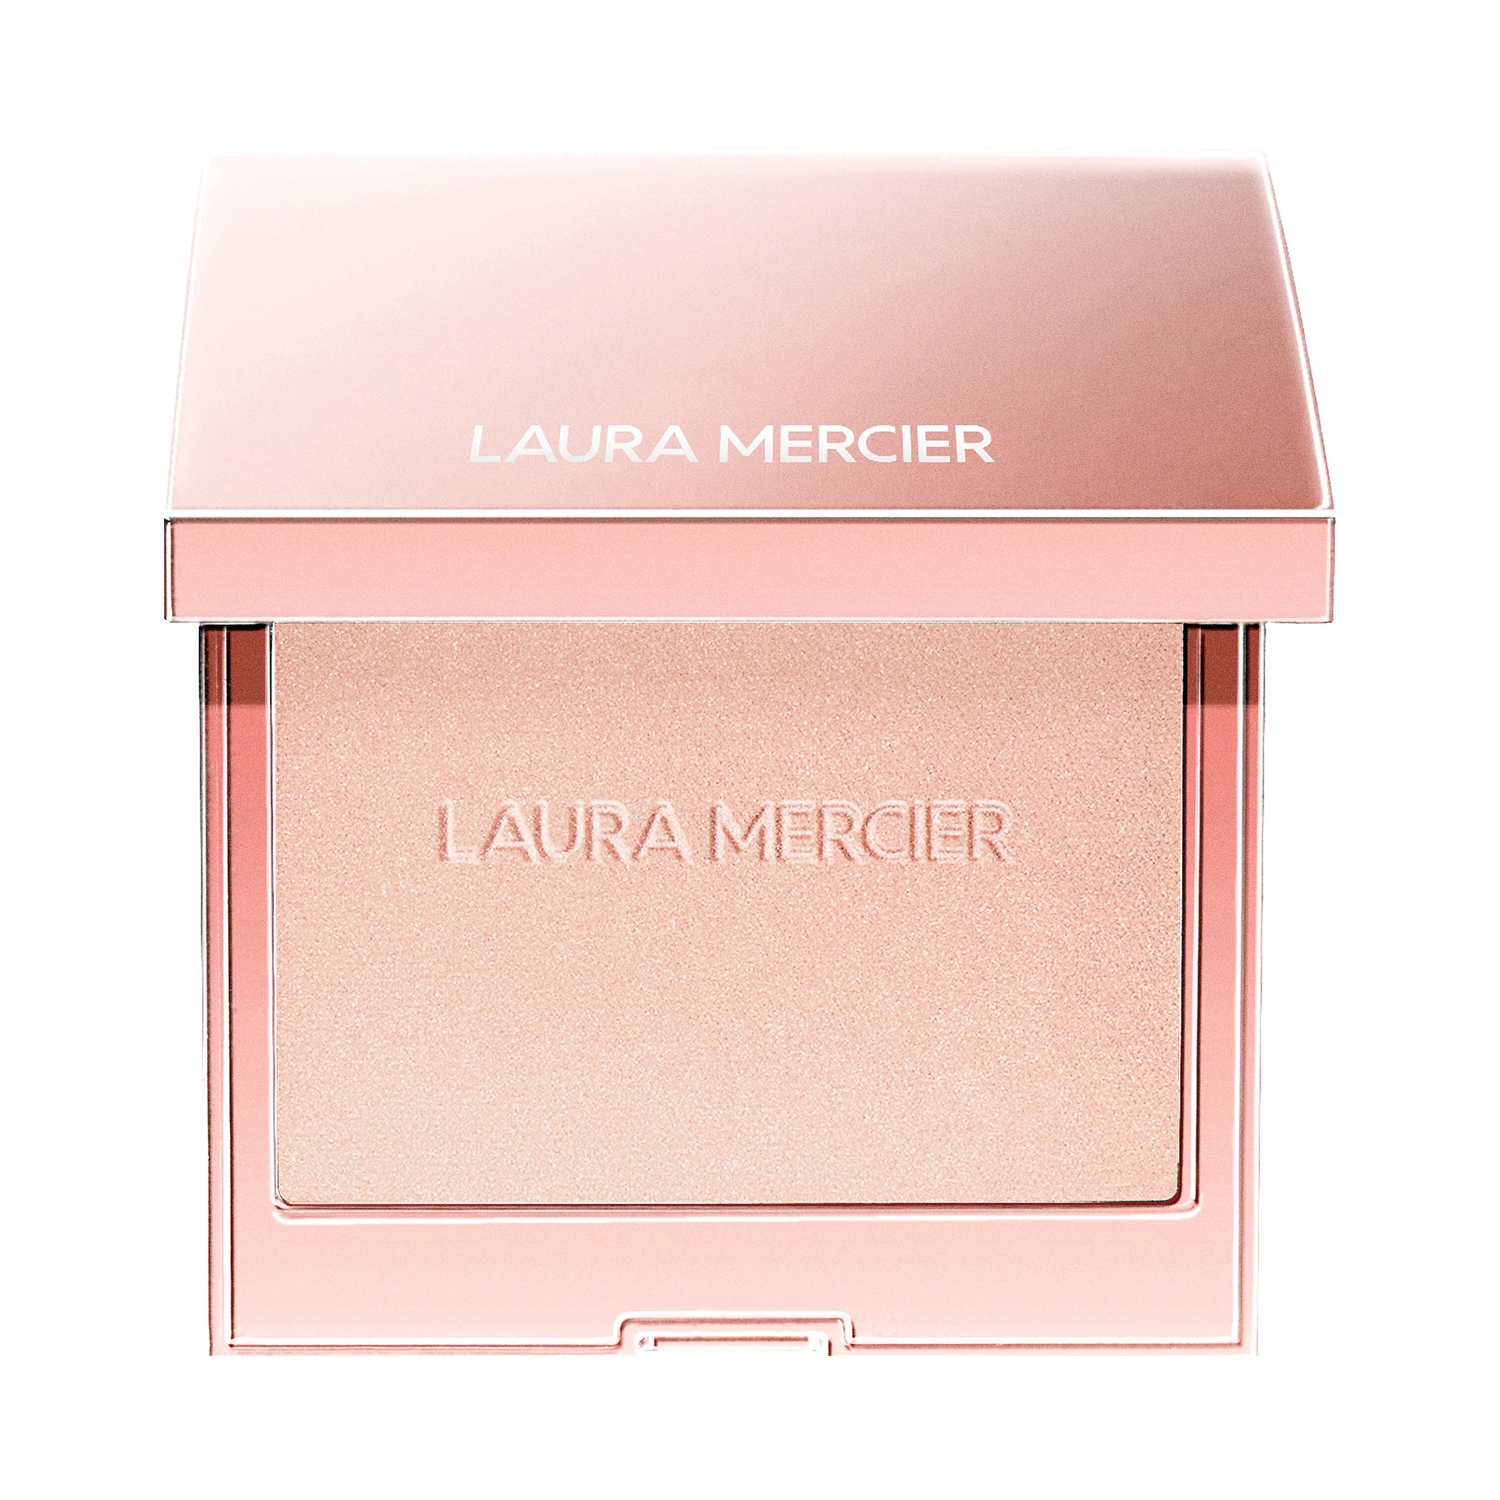 Laura Mercier | Laura Mercier Rose Glow Highlighting Powder - Beige (6g)